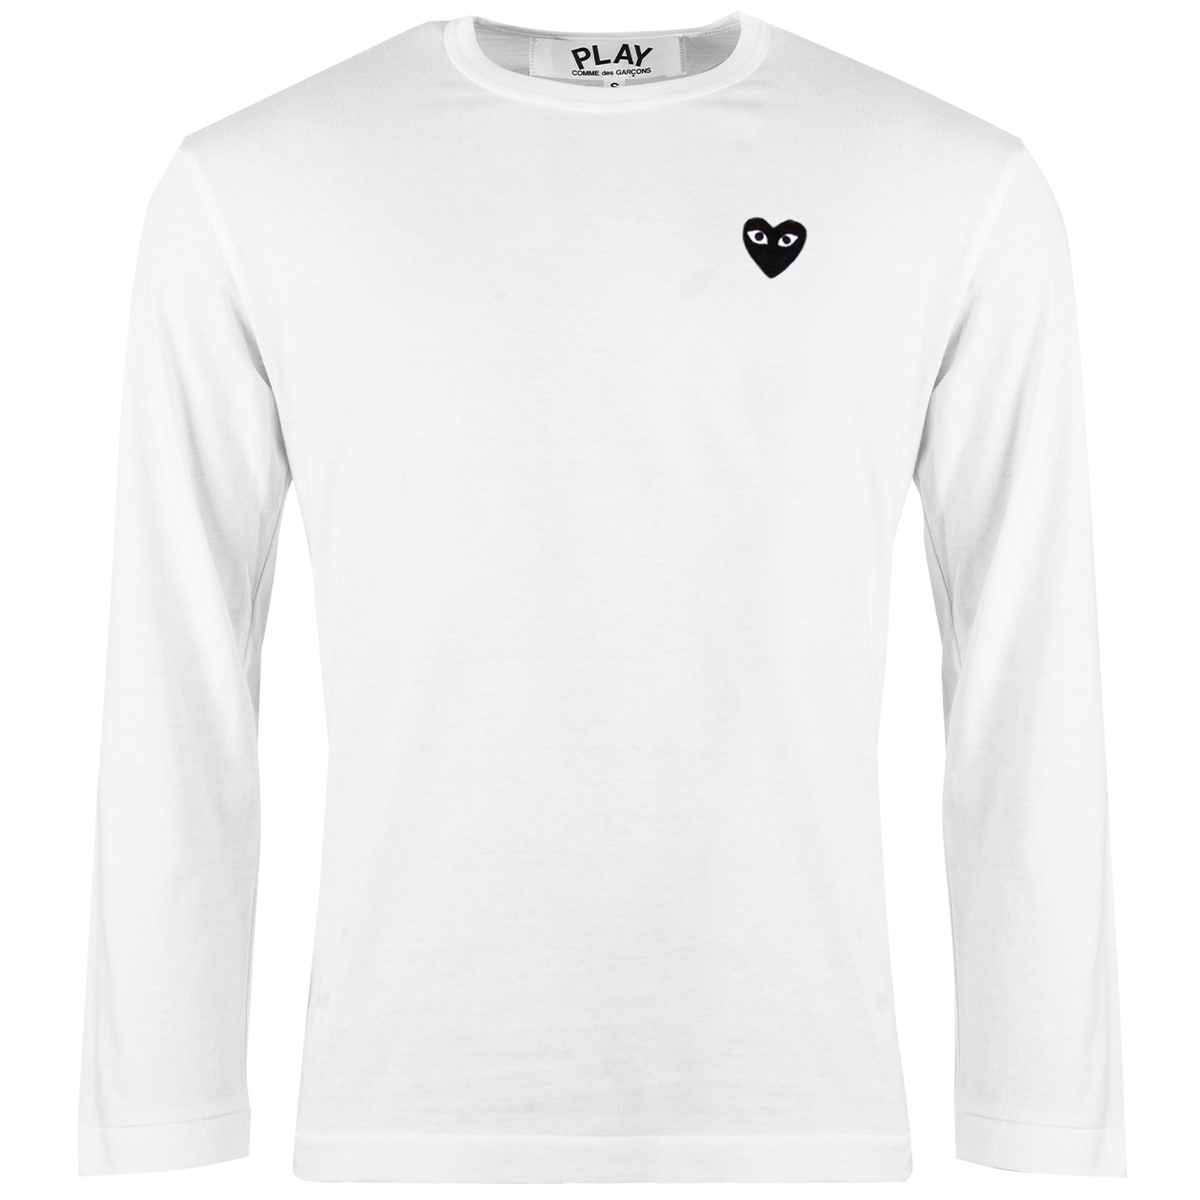 T120 Black Heart Long Sleeve T-shirt Xl White